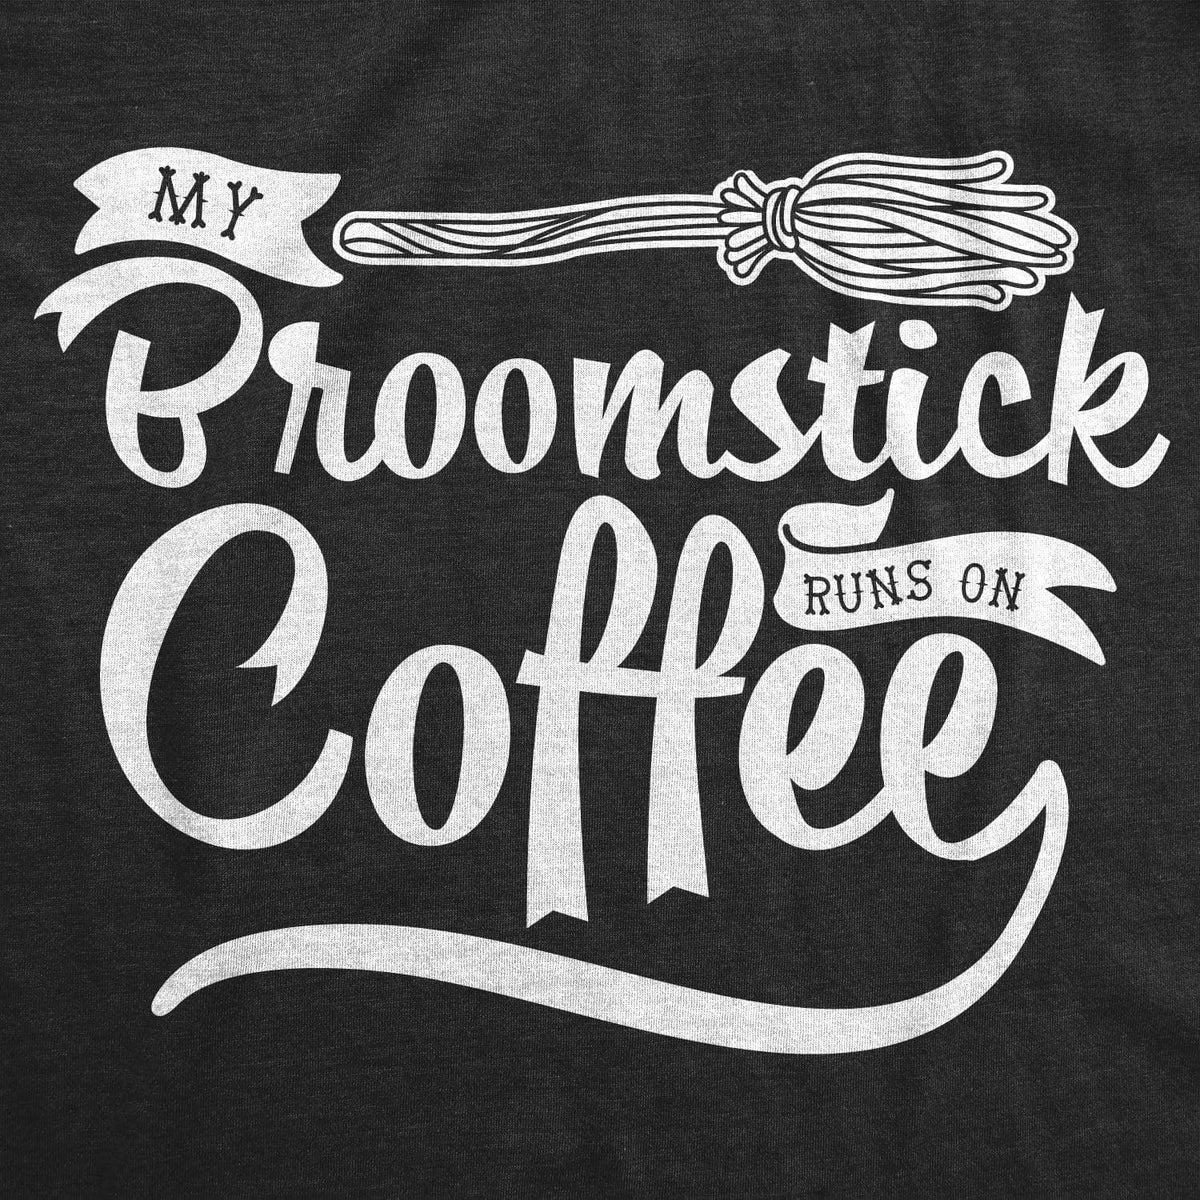 My Broomstick Runs On Coffee Women&#39;s Tshirt - Crazy Dog T-Shirts